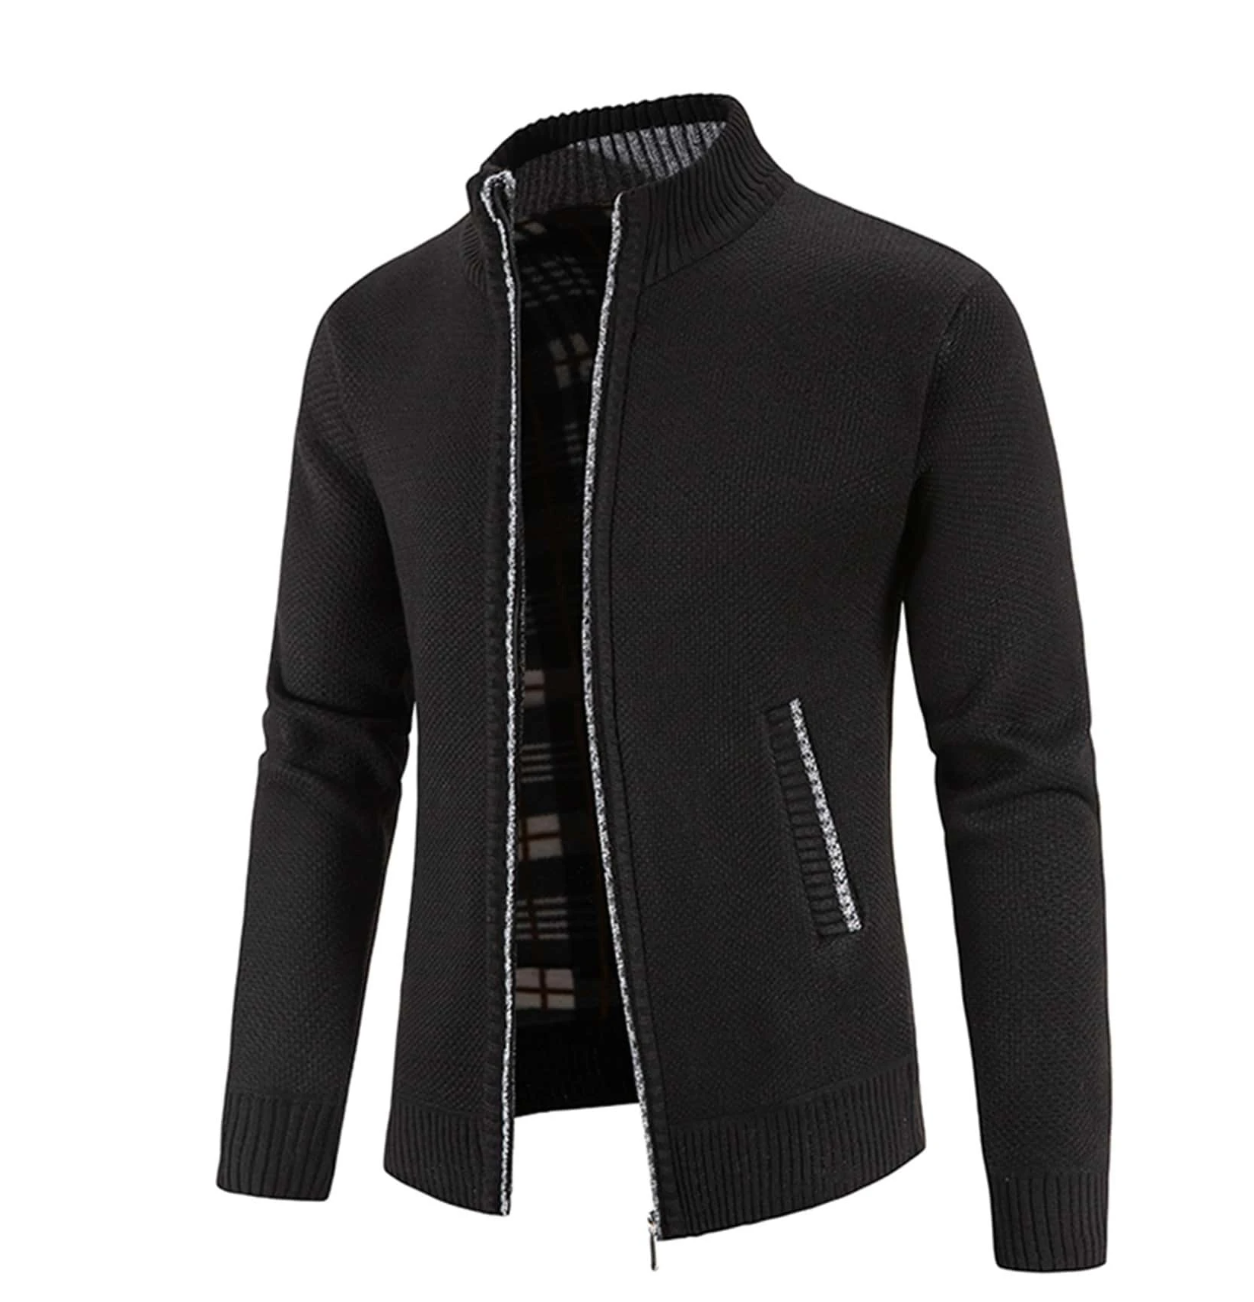 Stylish Sophistication: NITAGUT Men's Zip Up Jacket with Striking Contrast Plaid Lining